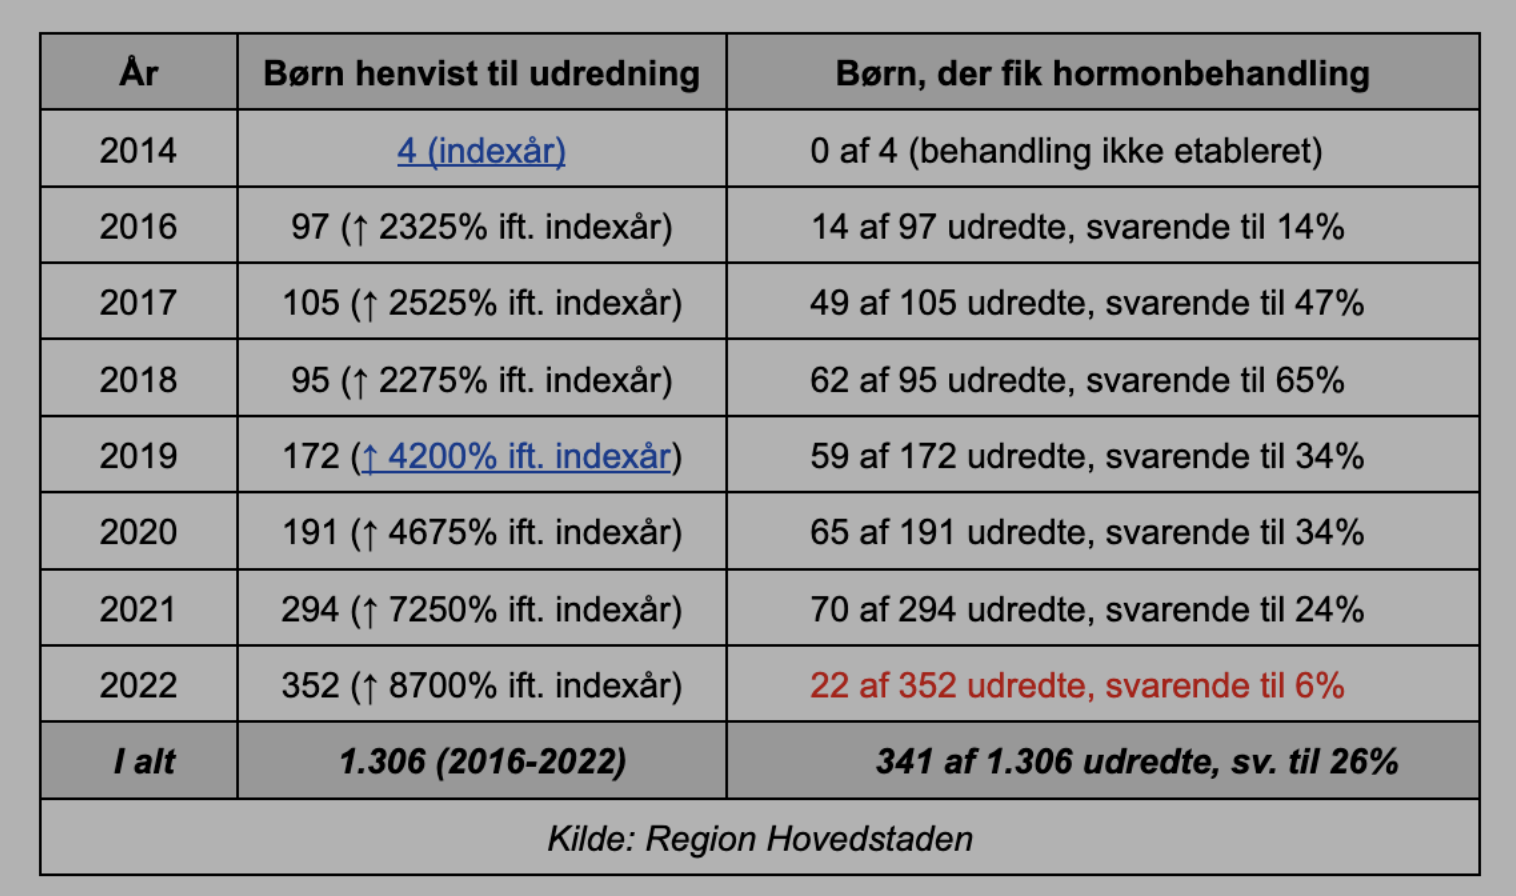 Denmark gender clinic intakes vs approval for hormones